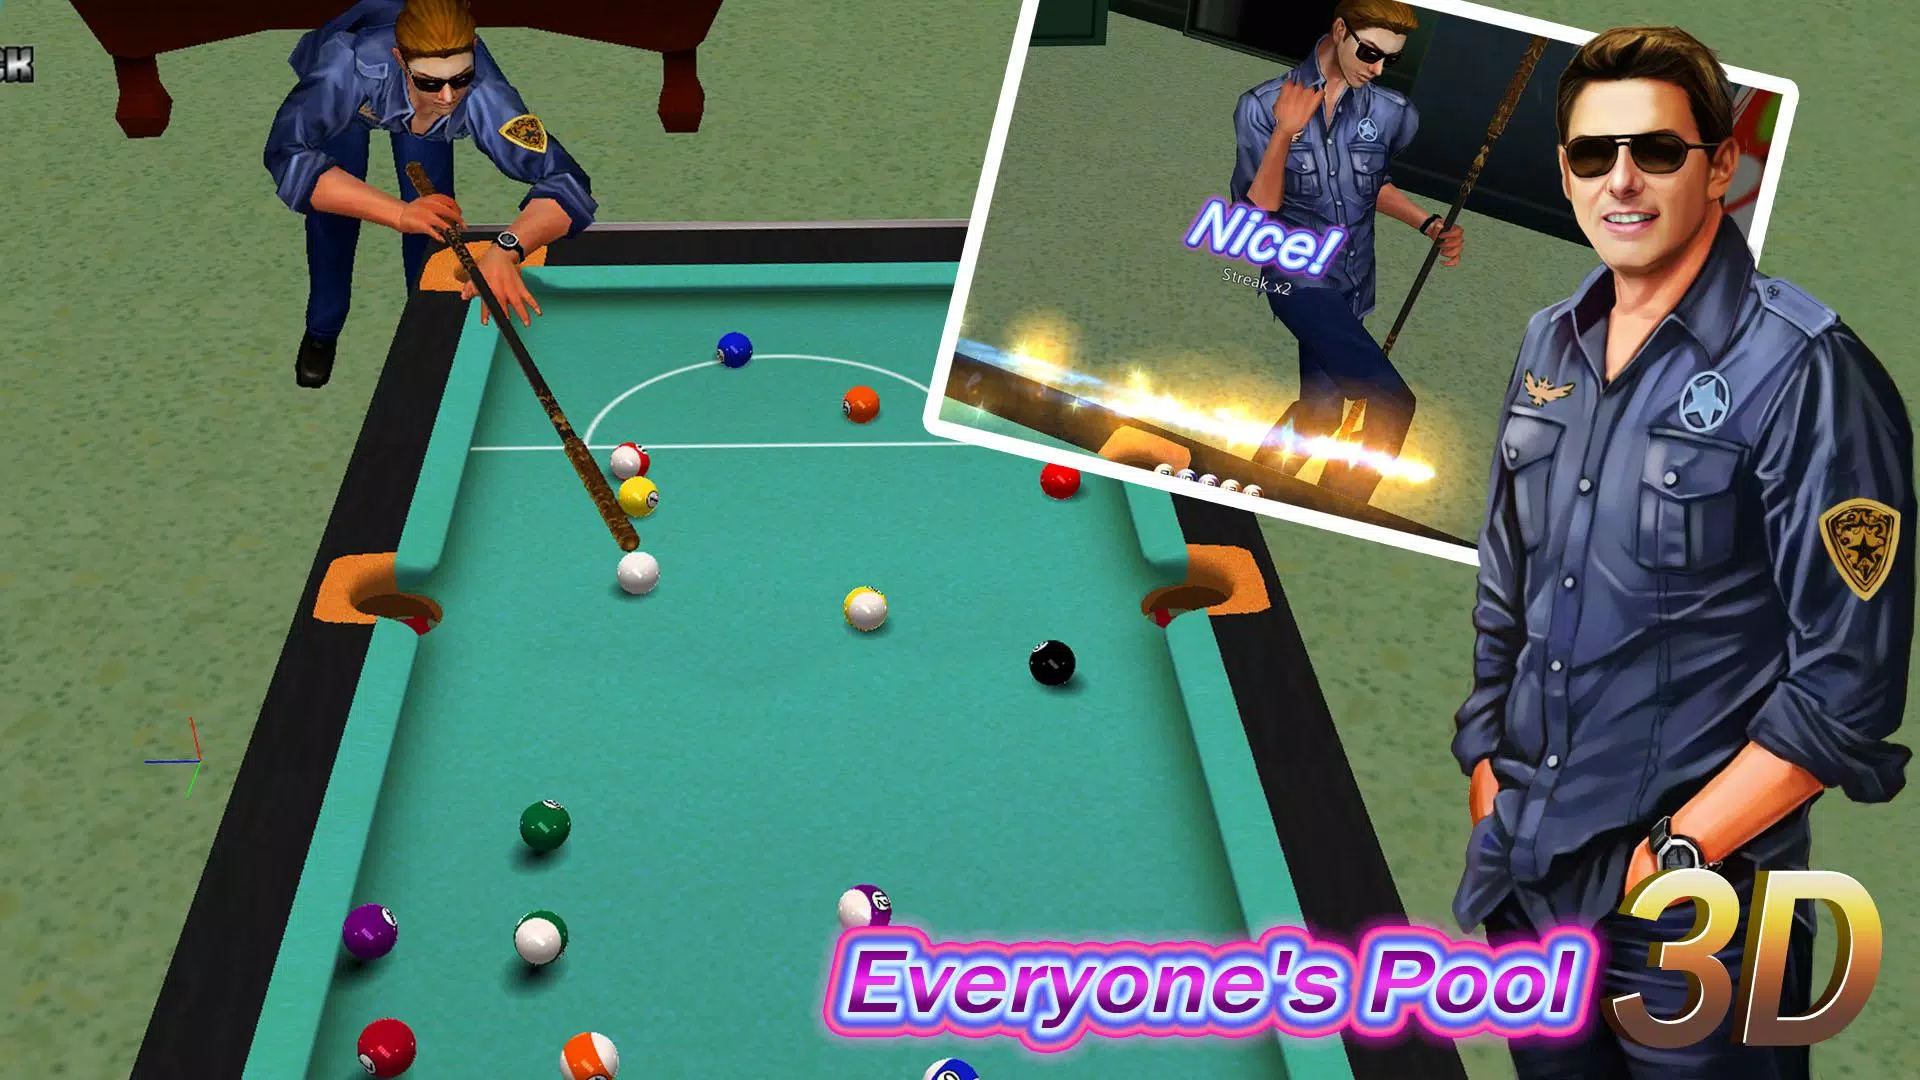 Real Pool 3D - Jogo 8 Ball Pool grátis de 2019 - Baixar APK para Android